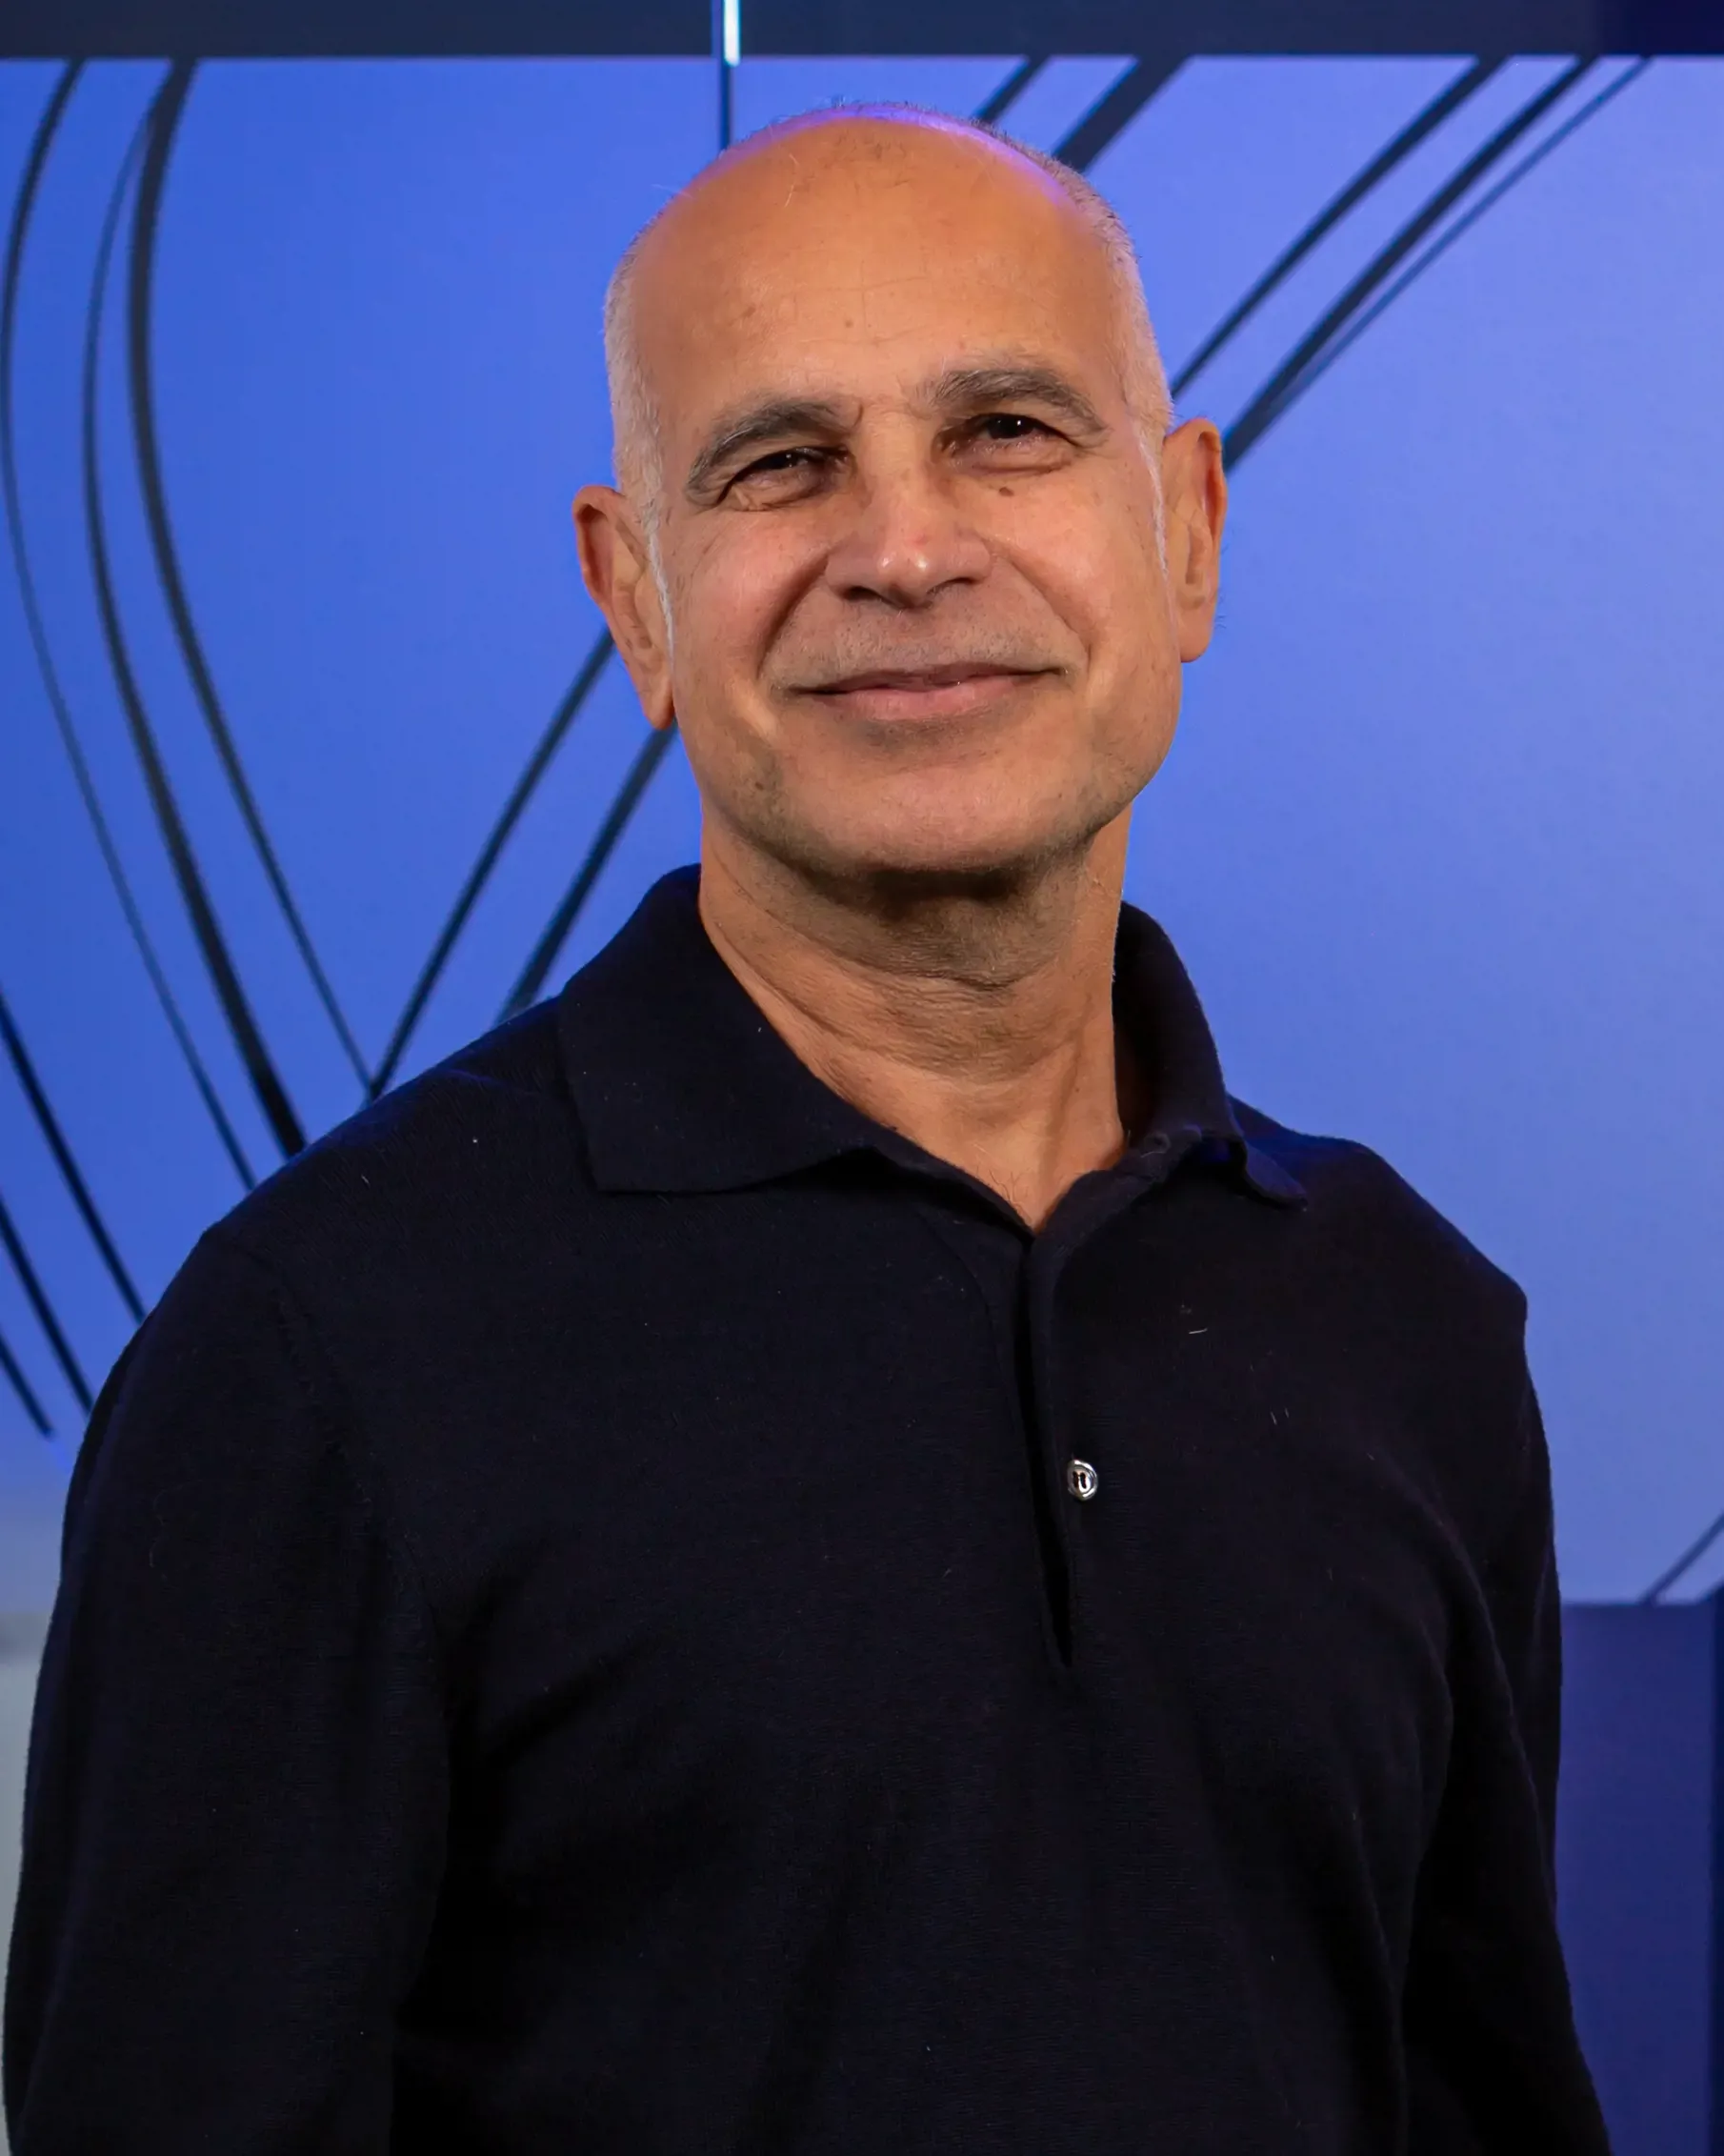 A bald man in a black shirt